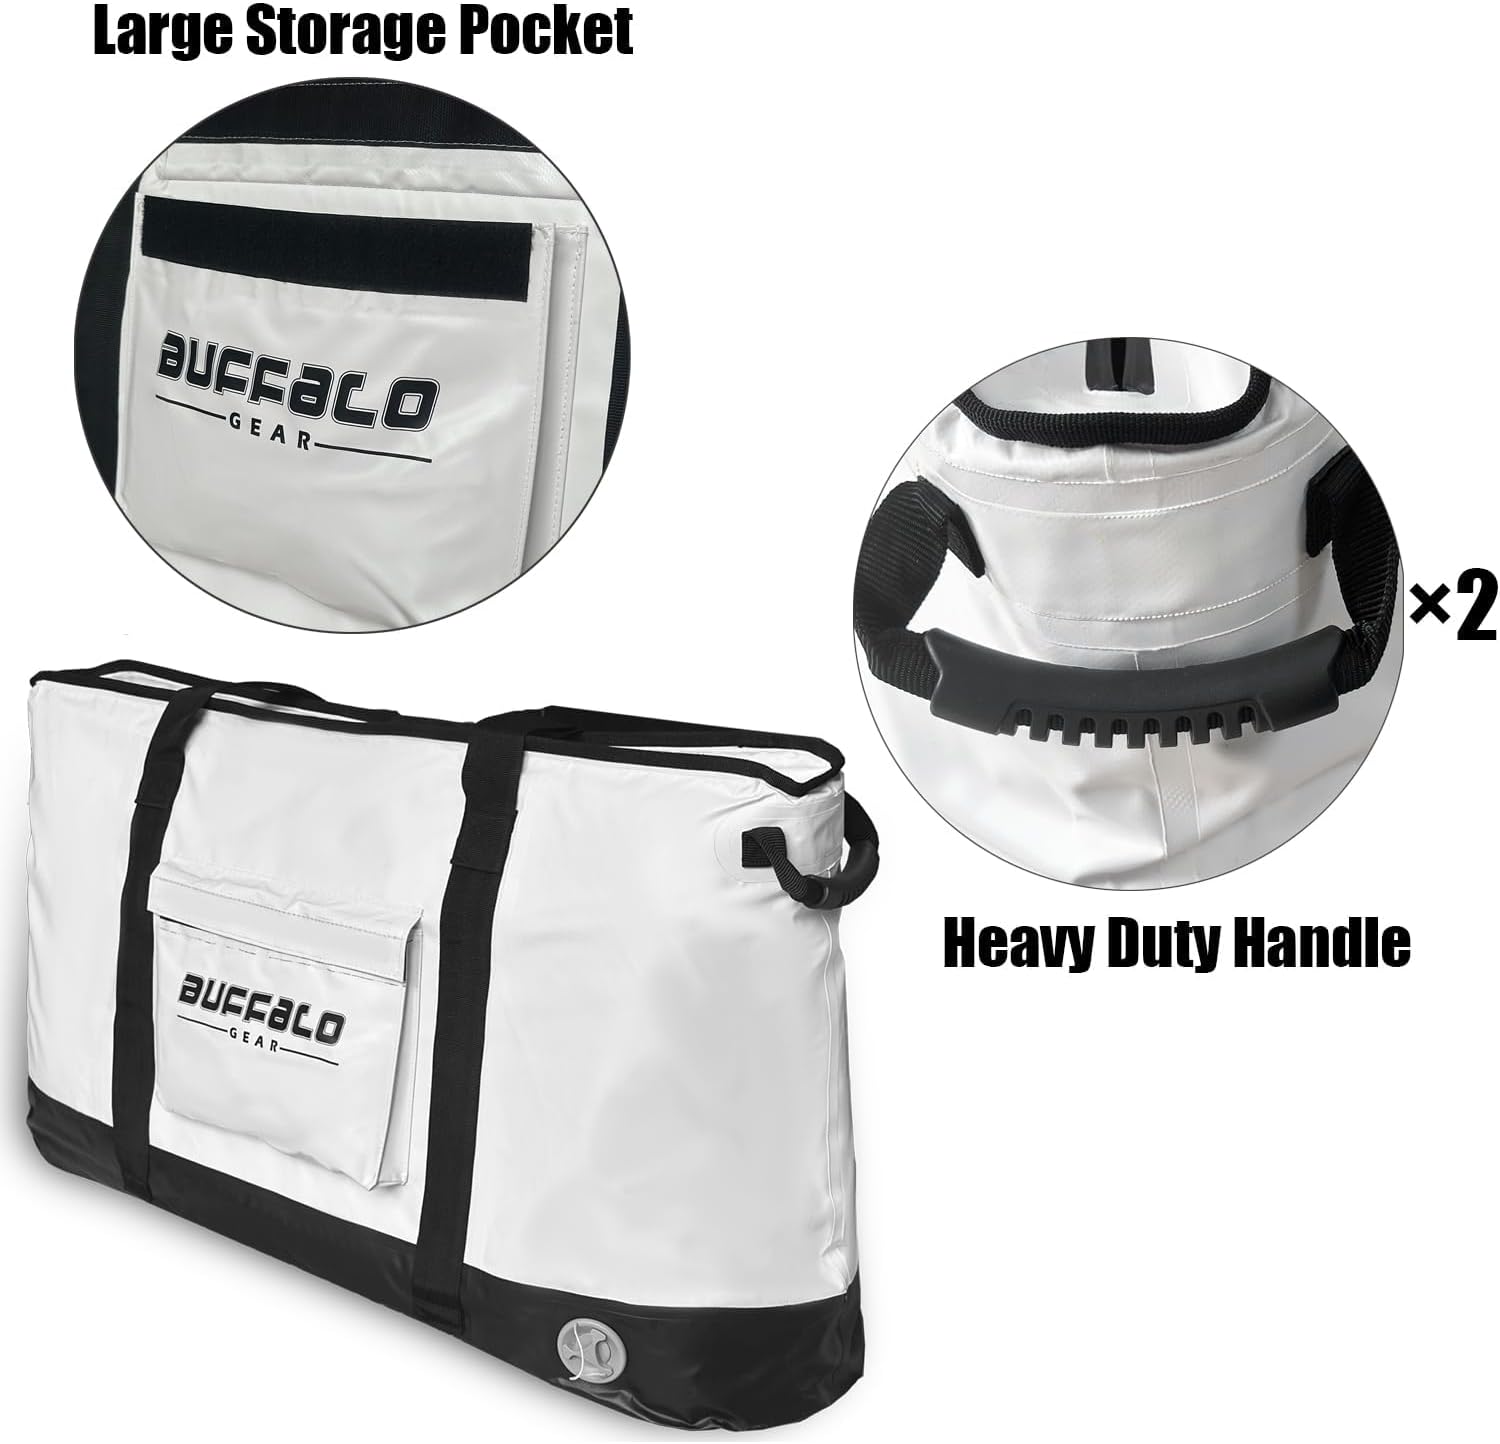 40x22x10'' Leak proof Fish Cooler Bag, 100L Large Capacity with YKK zipper - Buffalo Gear 